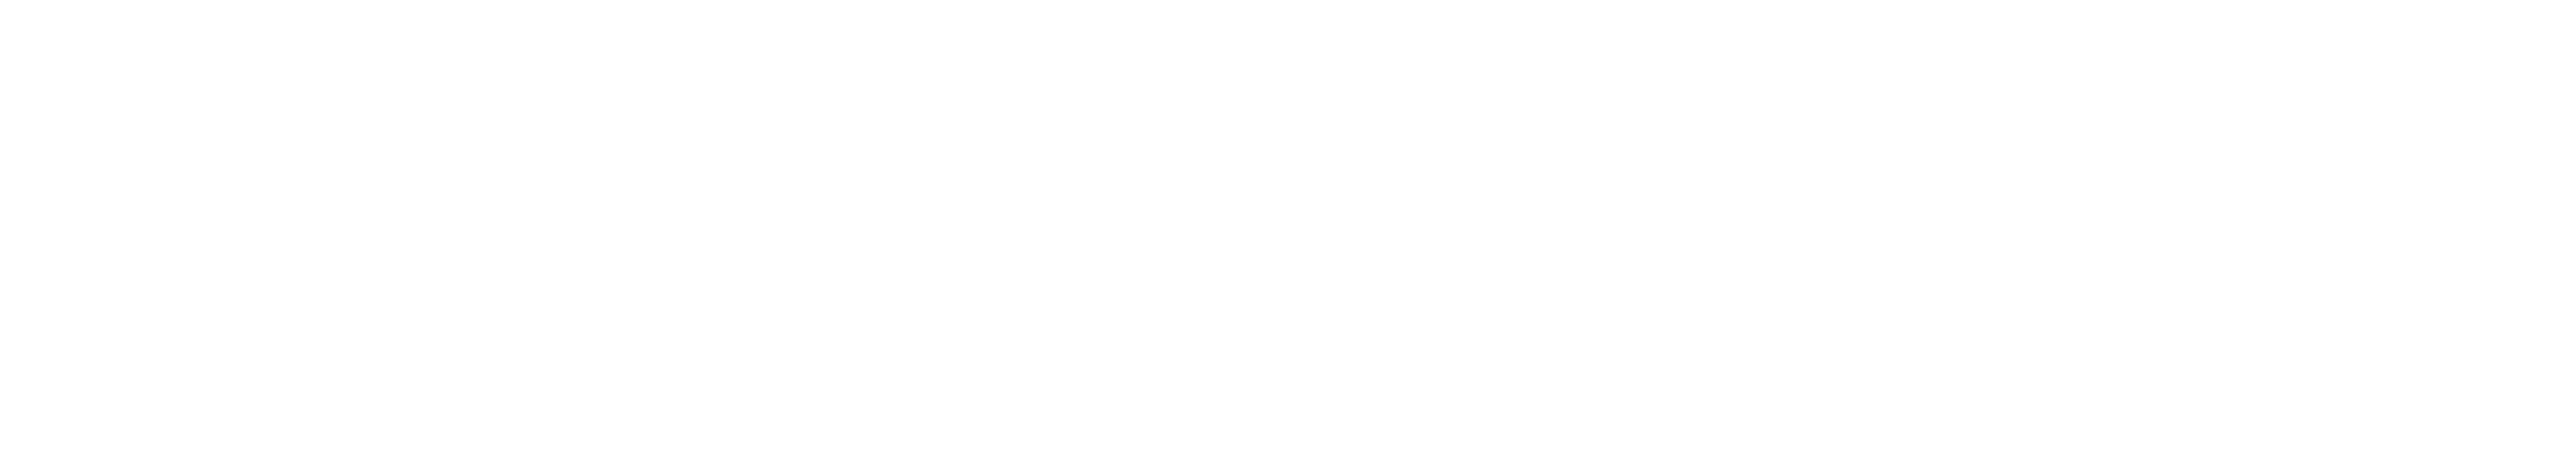 Montana Department of Transportation logo